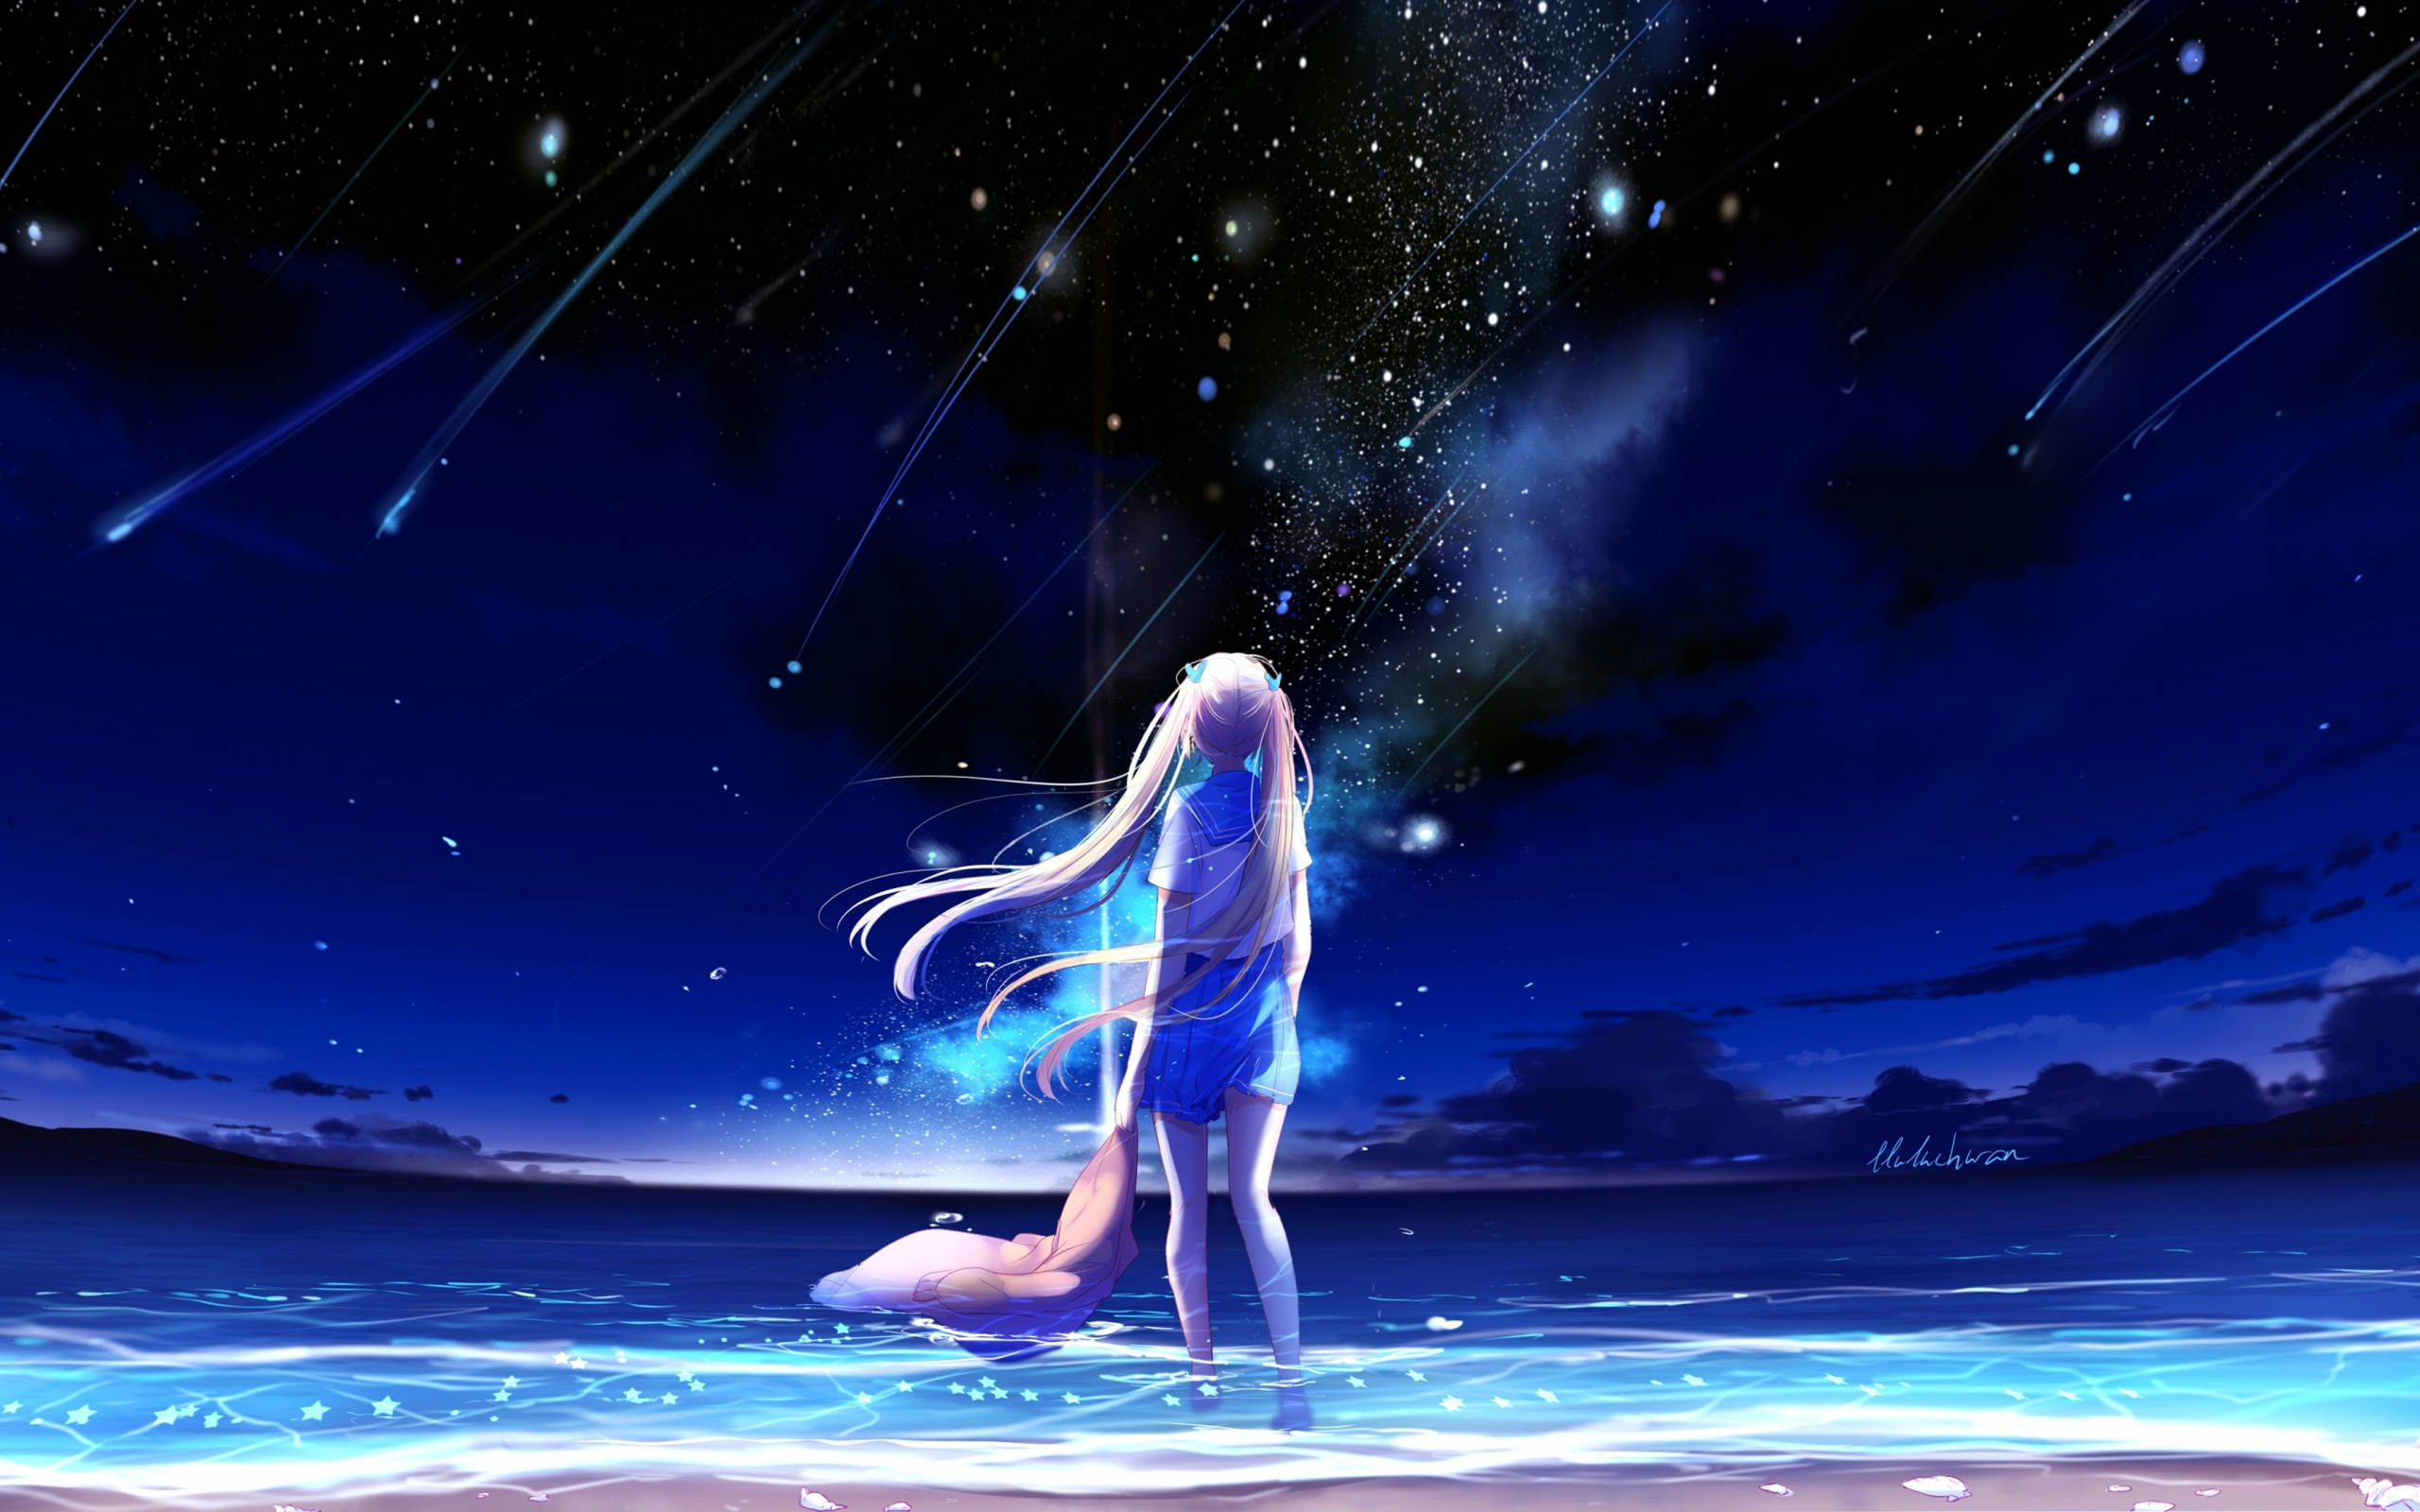 Download wallpaper 2560x1600 anime girl, outdoor, night, starfall, dual  wide 16:10 2560x1600 hd background, 5622